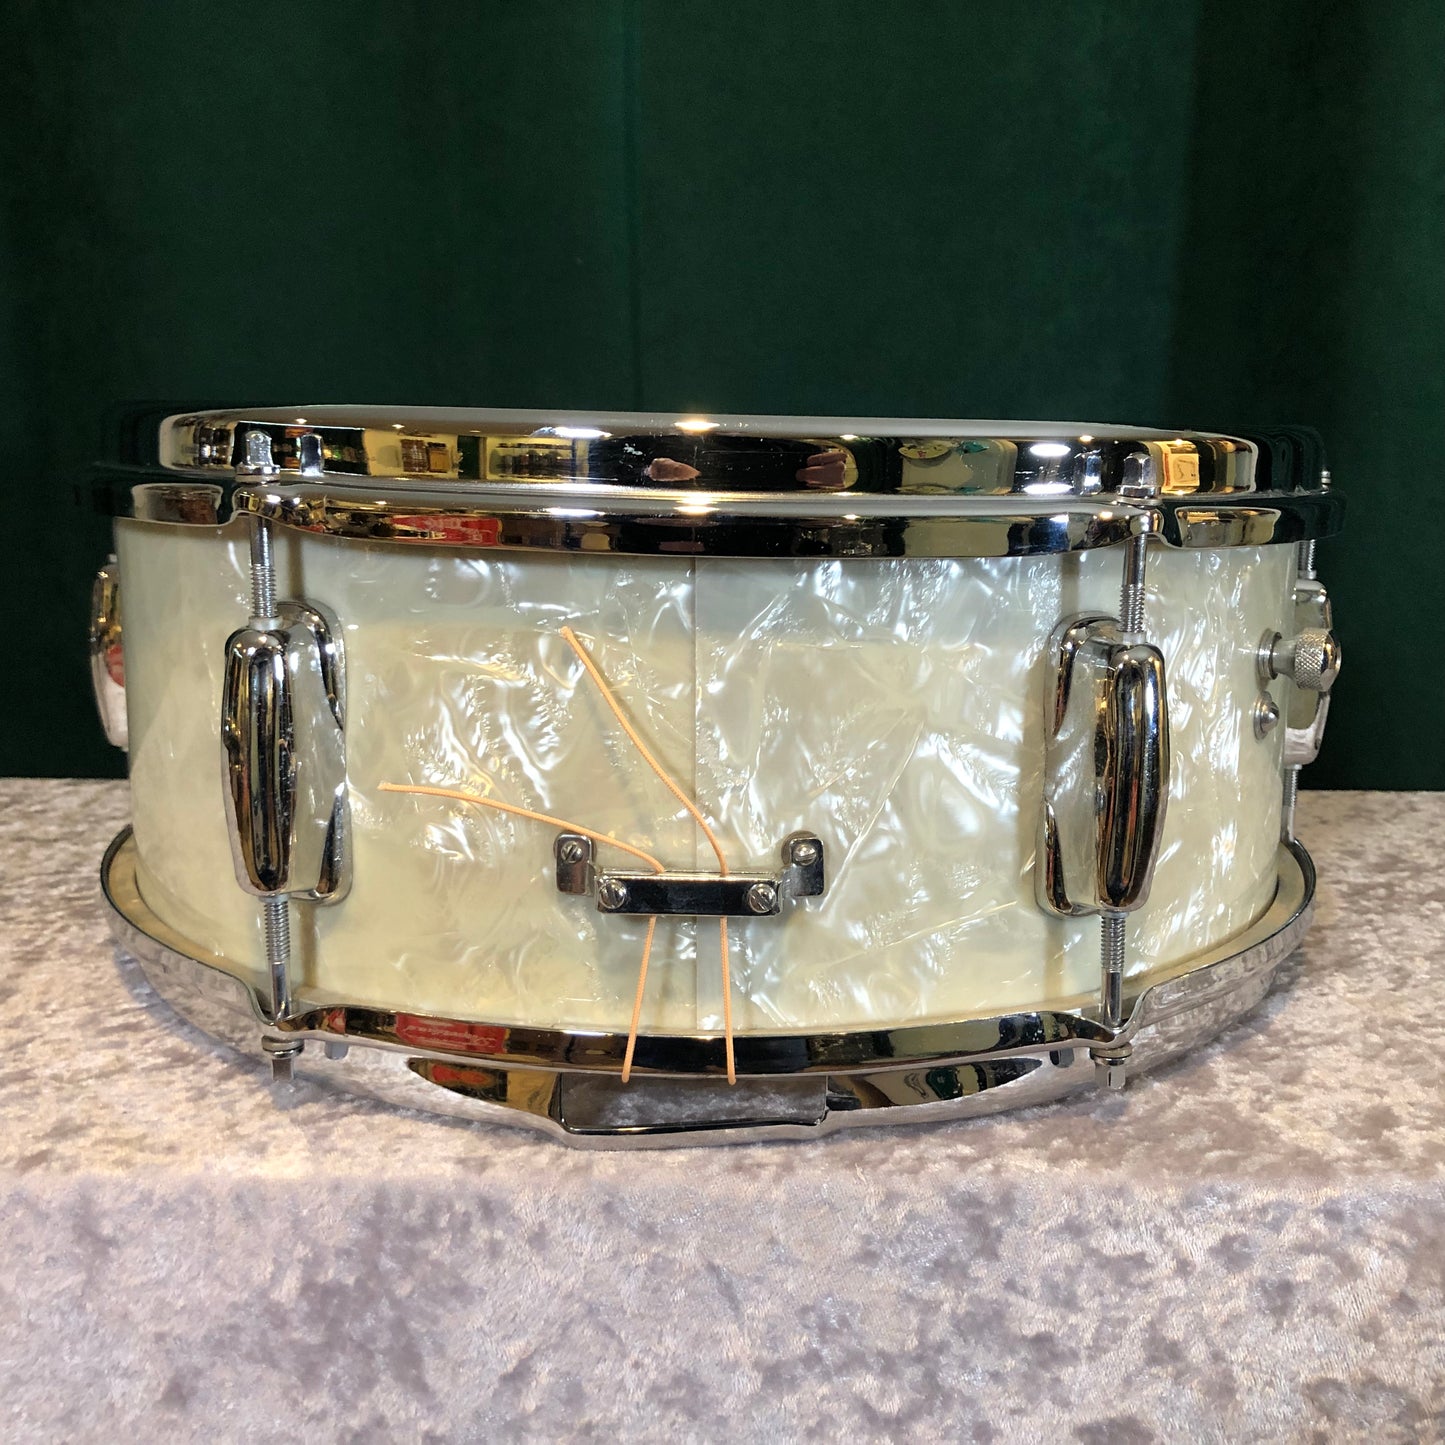 1965 Slingerland 5.5x14 No. 161 Deluxe Student Model Snare Drum White Marine Pearl